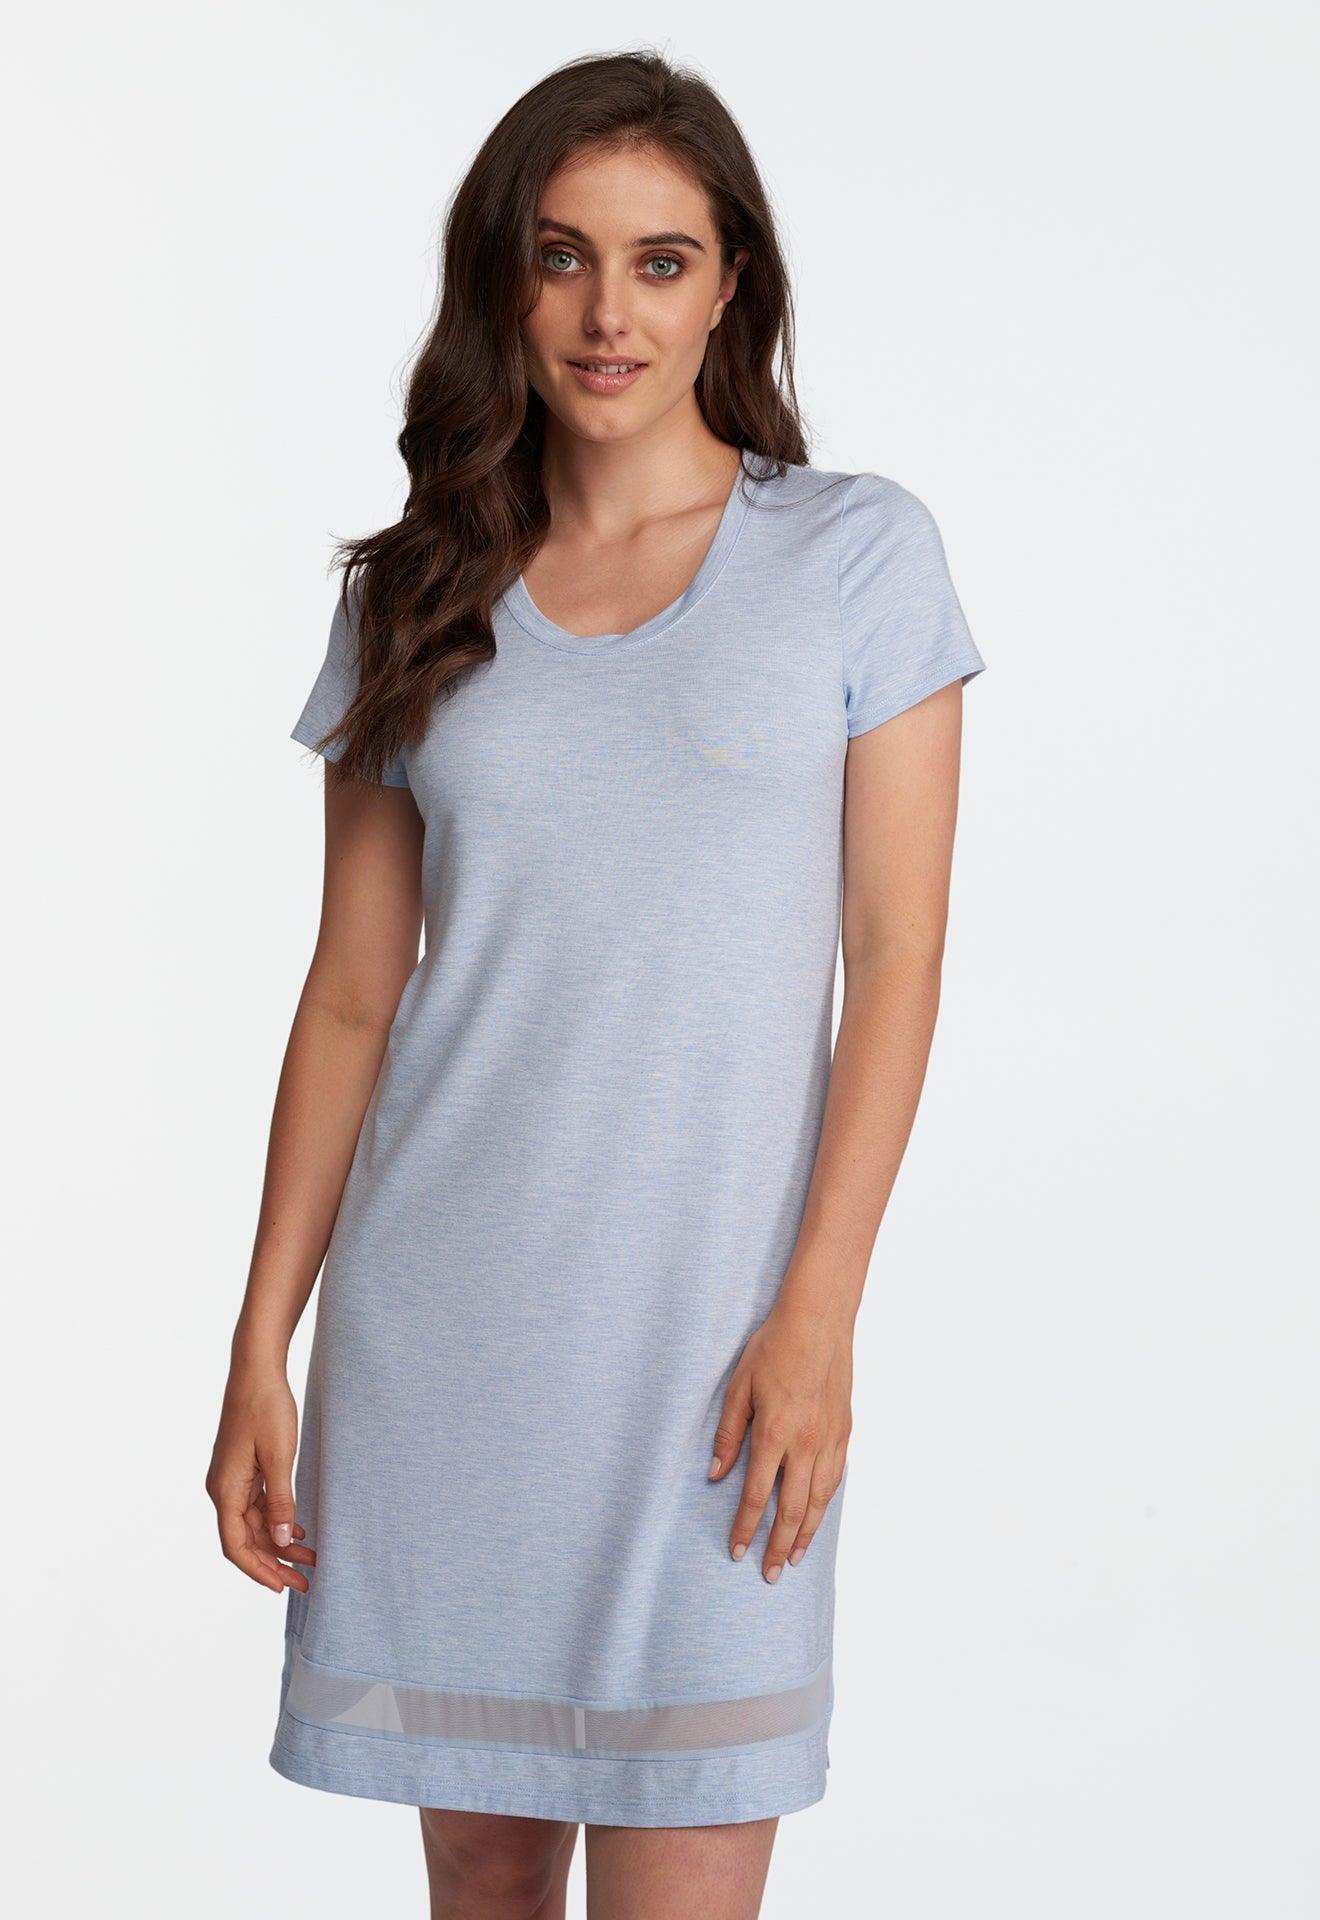 Women's Cooling Sleepwear | Cooling Pajamas – Lusome Sleepwear USA